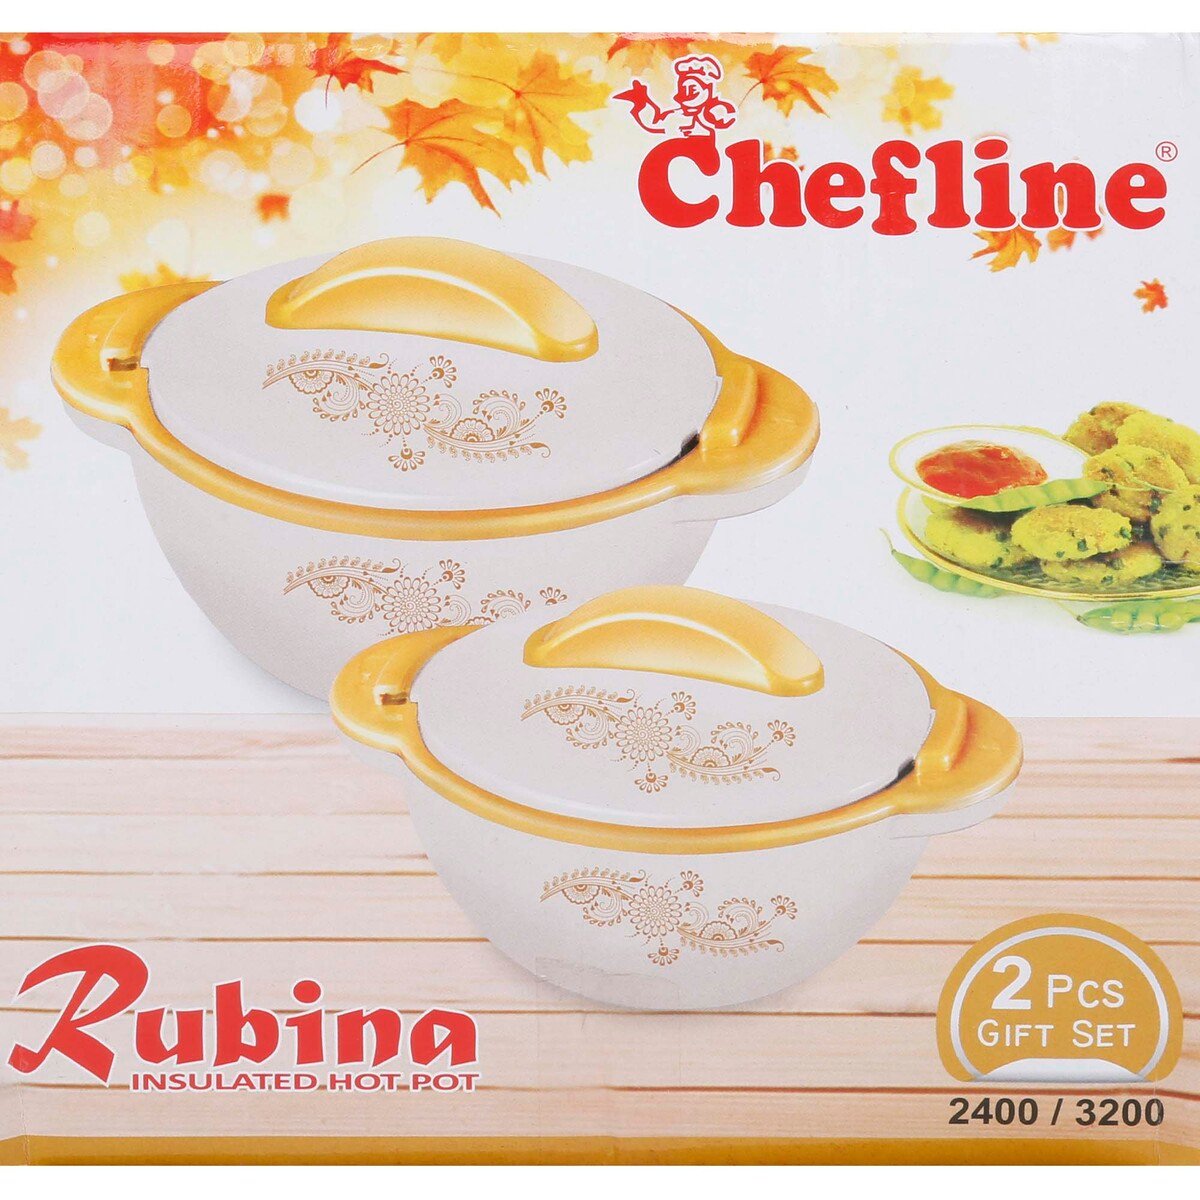 Chefline Plastic Insulated Hot Pot Set Rubina, Pack of 2, 2400 ml + 3200 ml